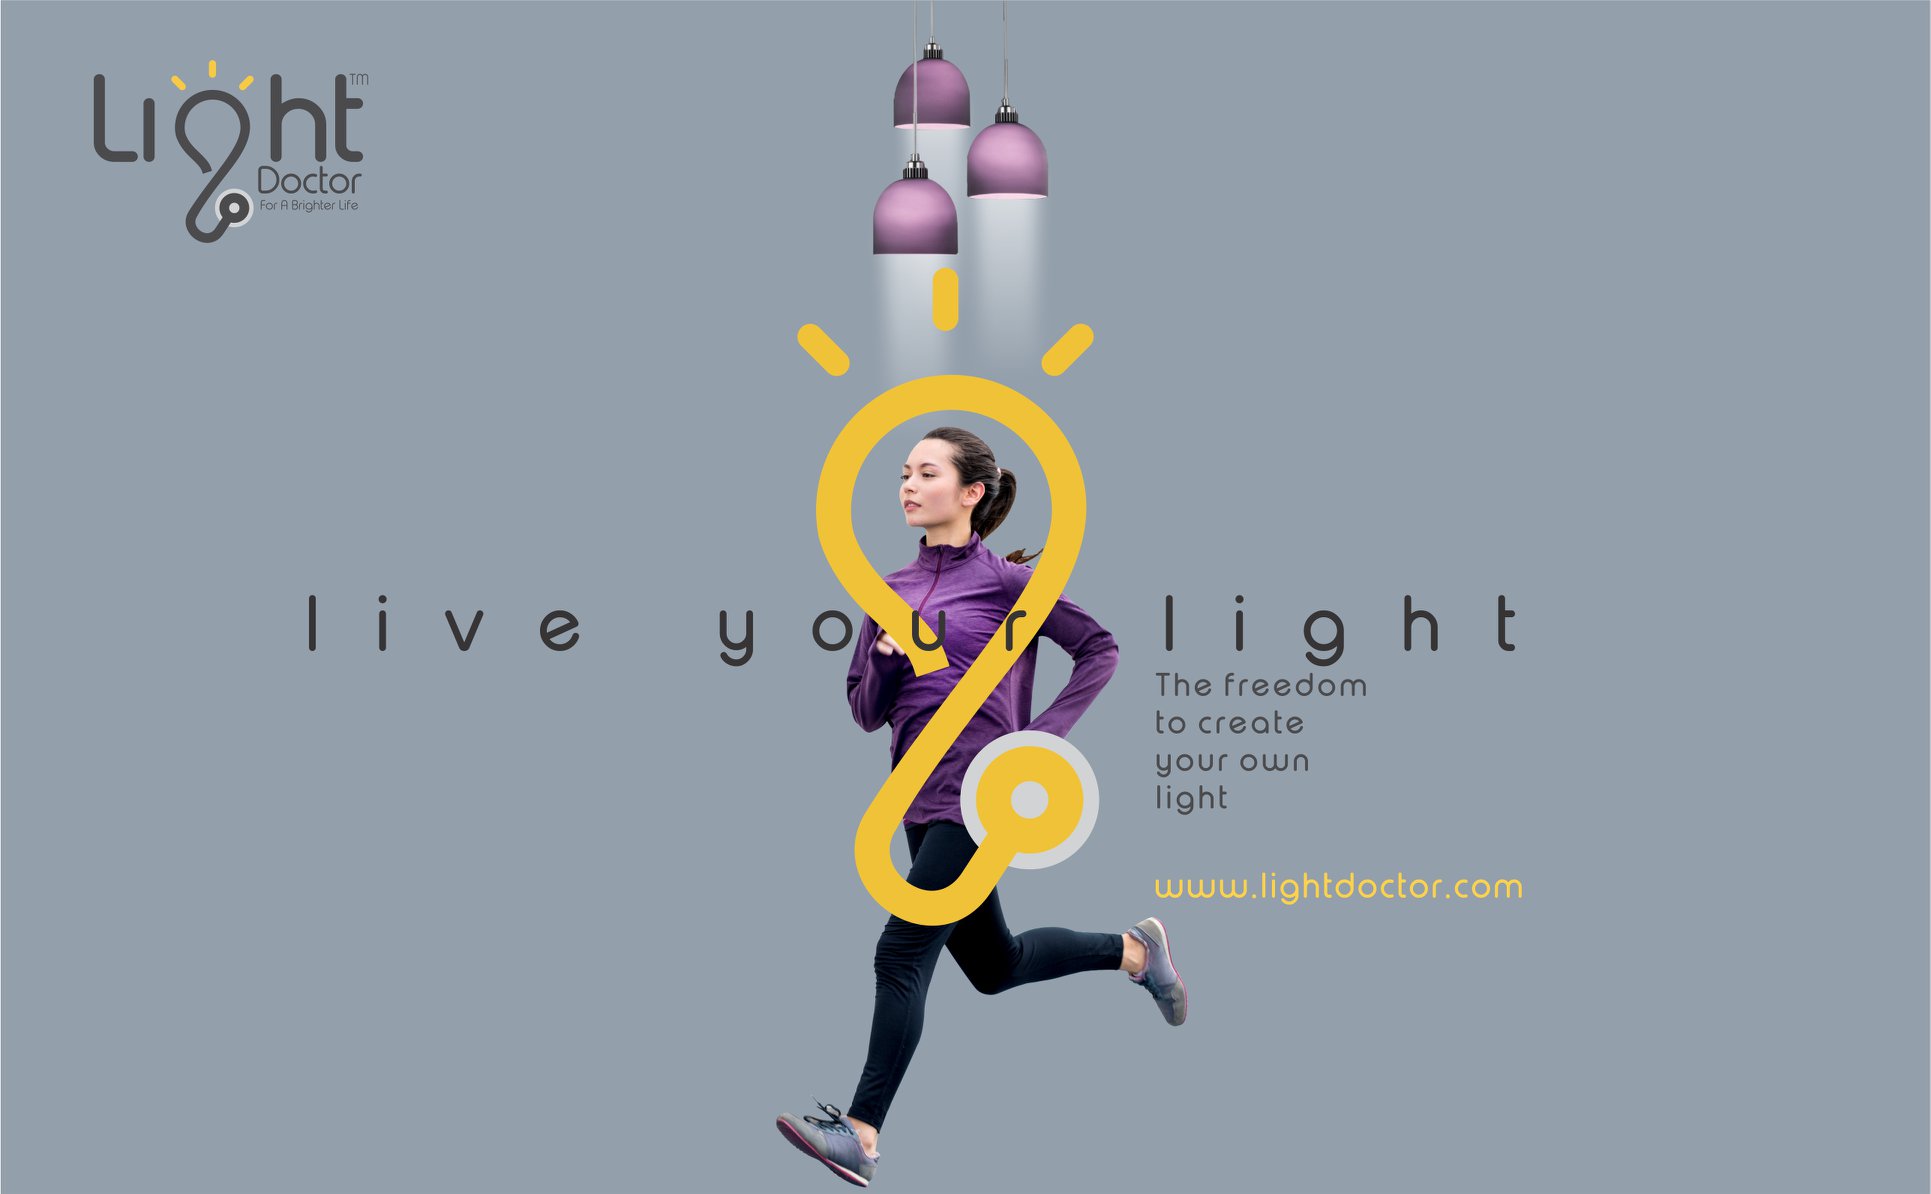 Light Doctor website design